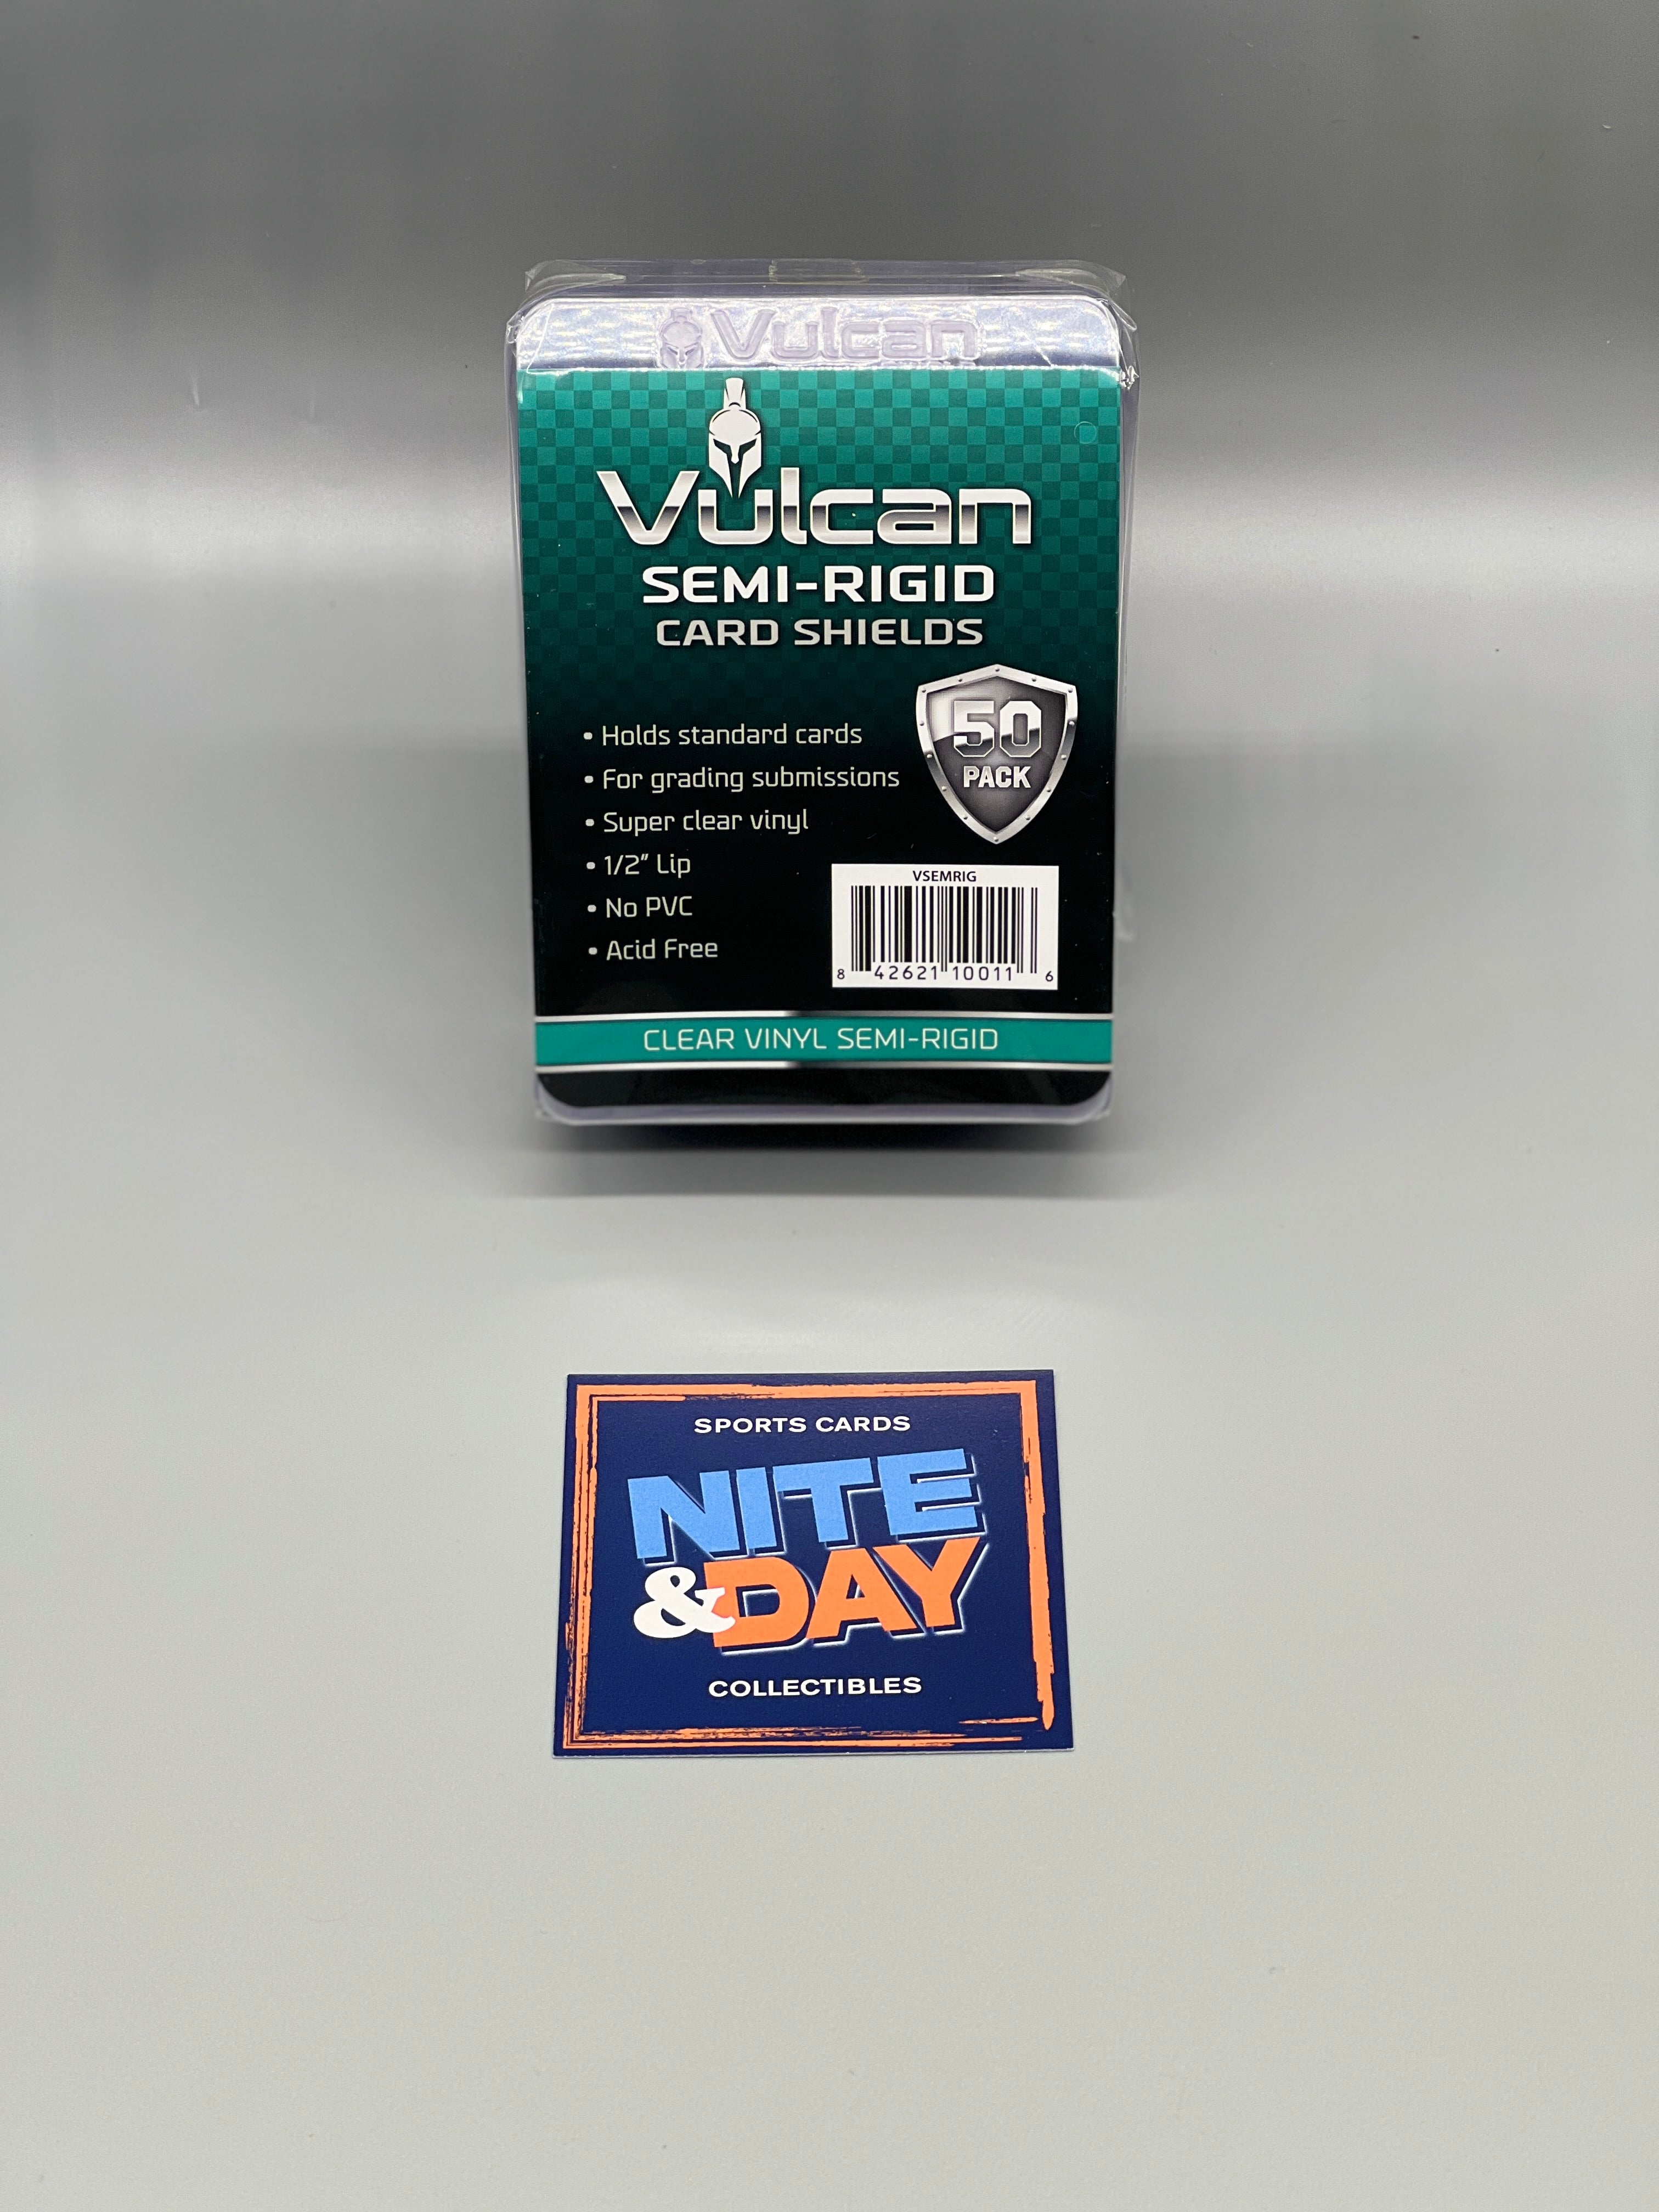 Semi Rigid Card Sleeves by Vulcan Shield